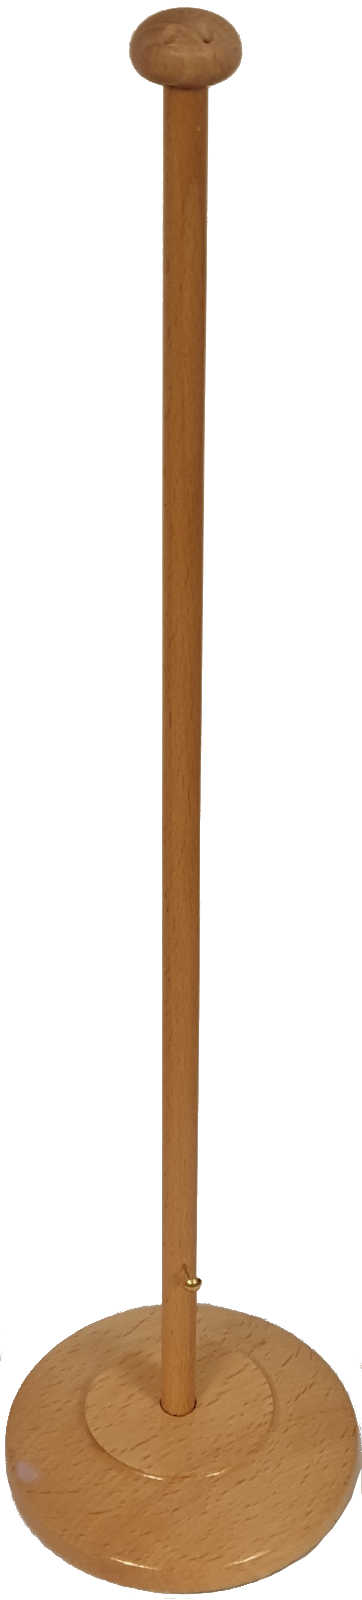 Tischflaggenständer Holz naturhell Stufenfuß 11 cm